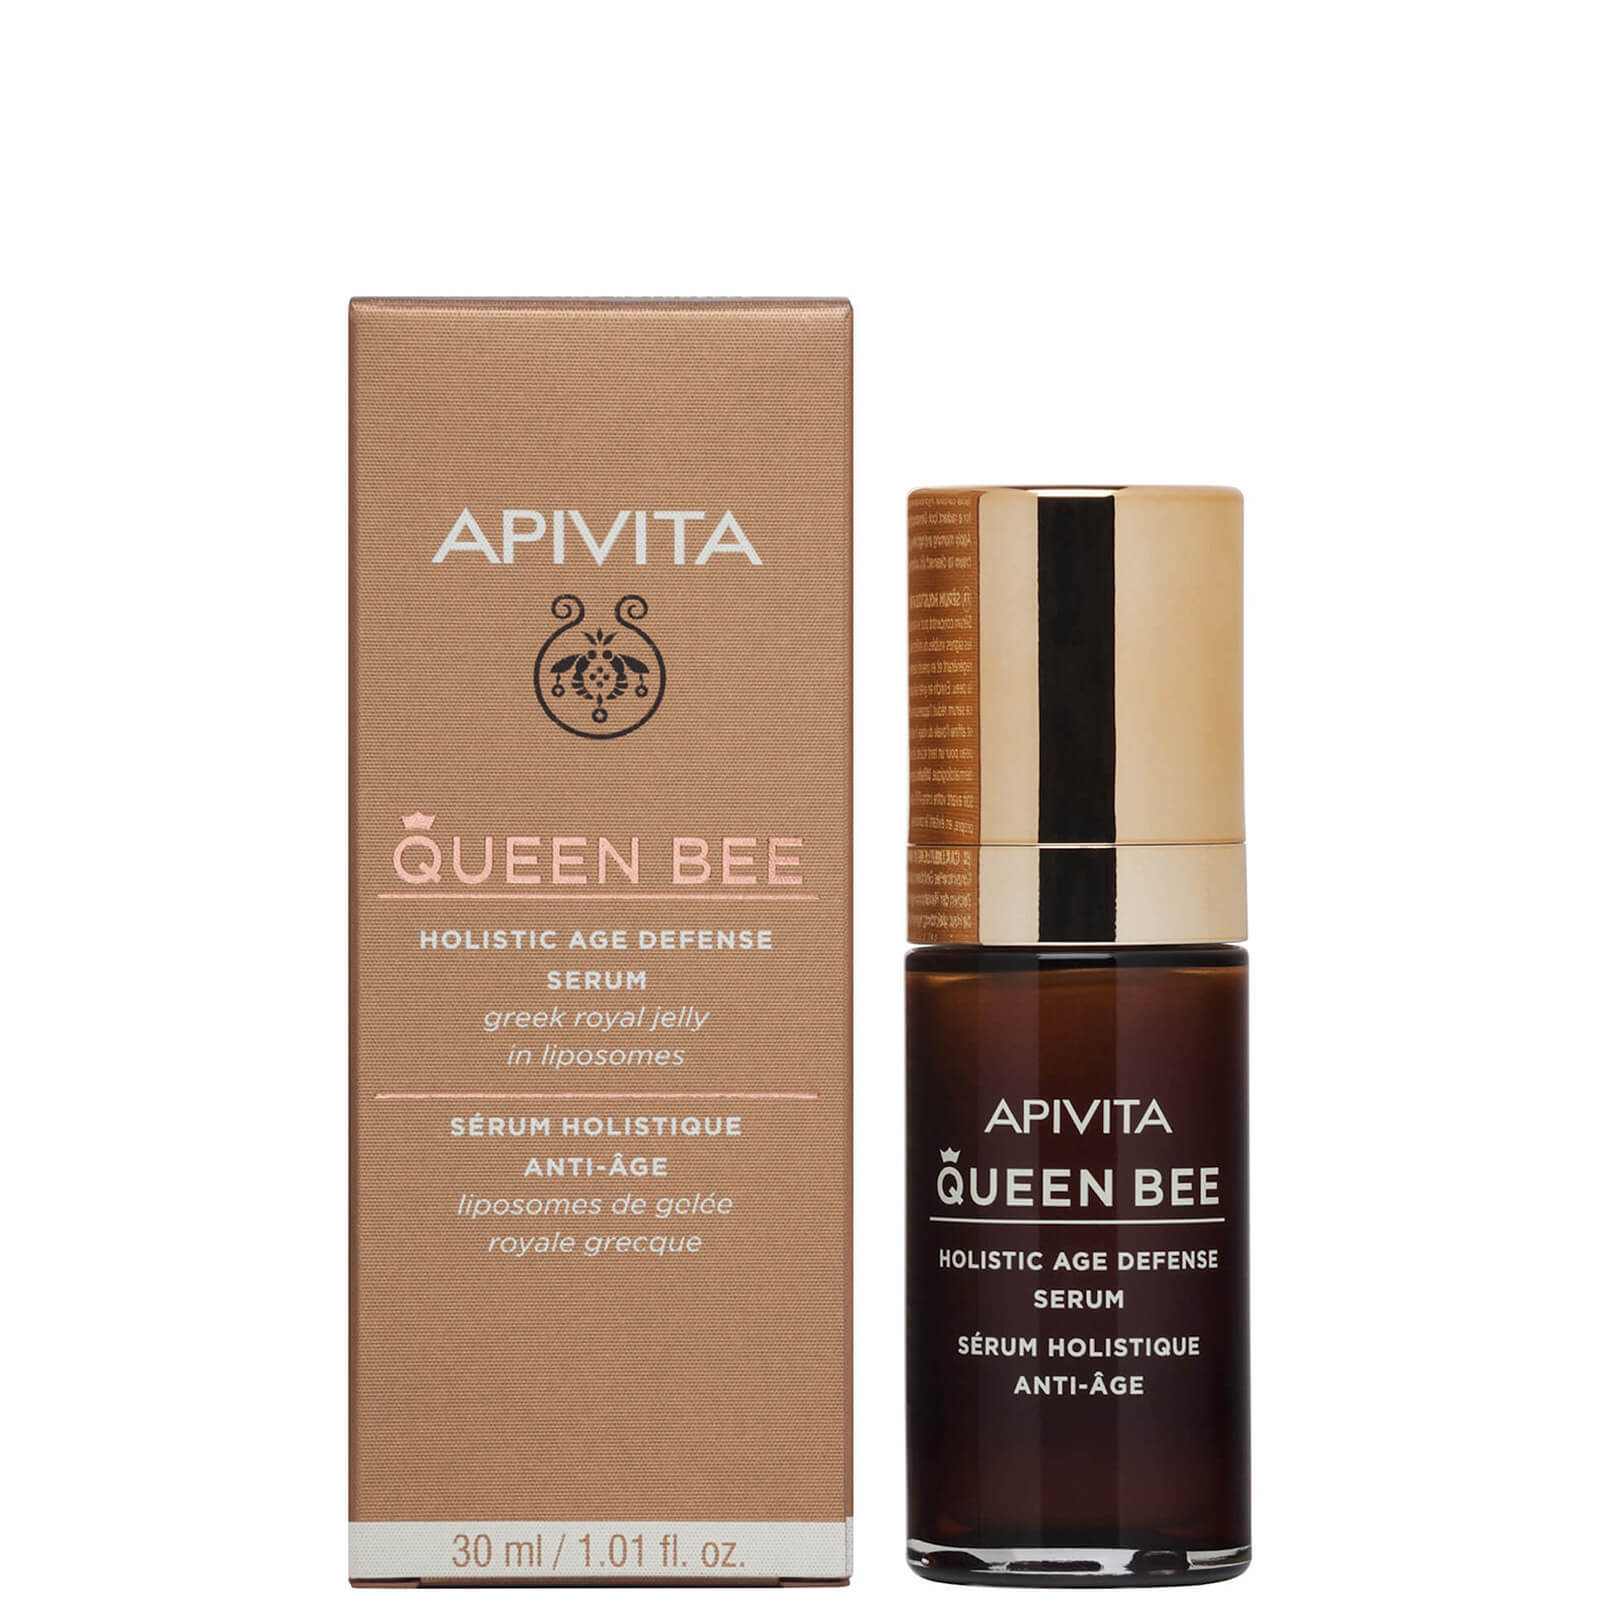 APIVITA Queen Bee Holistic Age Defense Serum 30ml